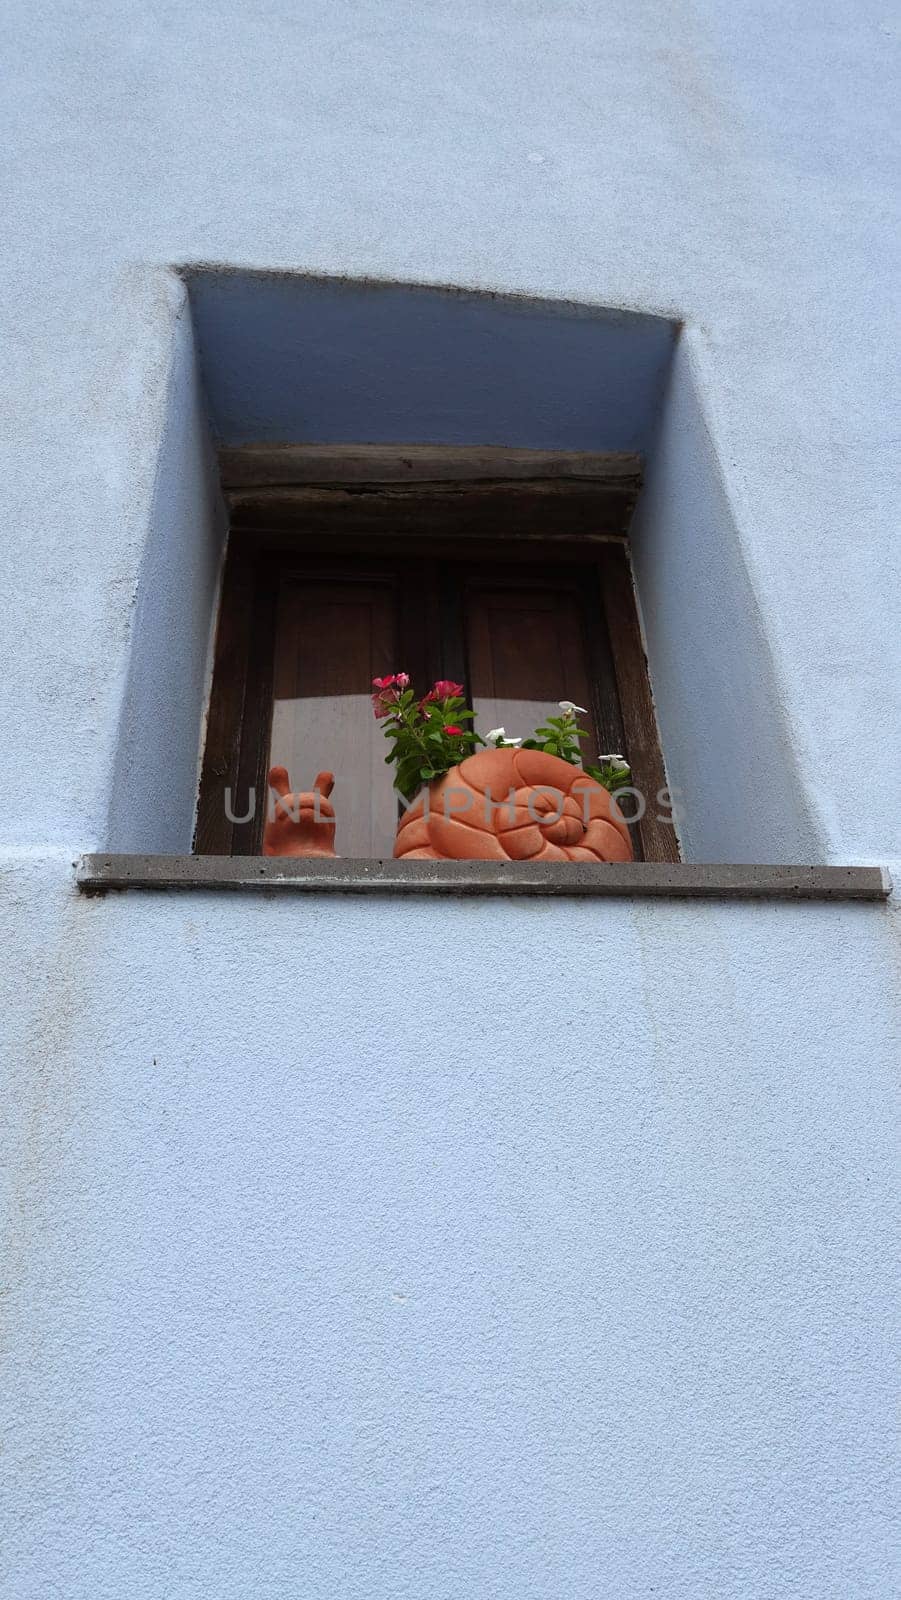 Posada, Italy, August 1 2021. A terracotta snail on a window sill. by Jamaladeen